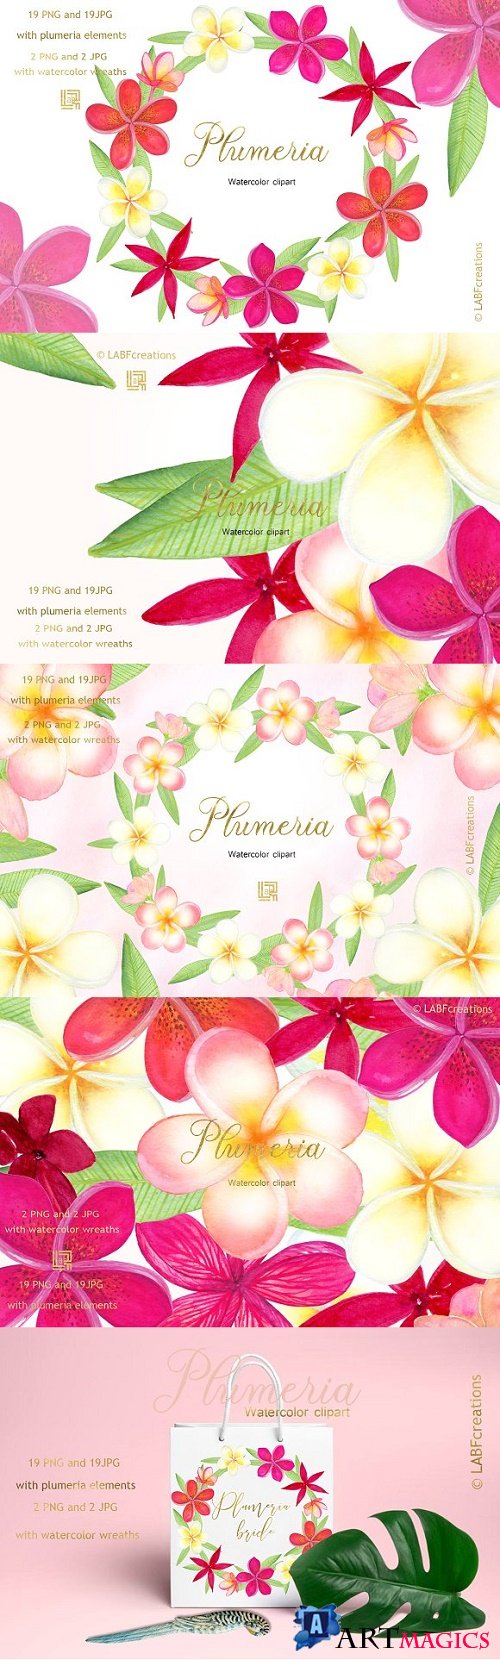 Plumeria Tropical watercolor flowers - 2906899